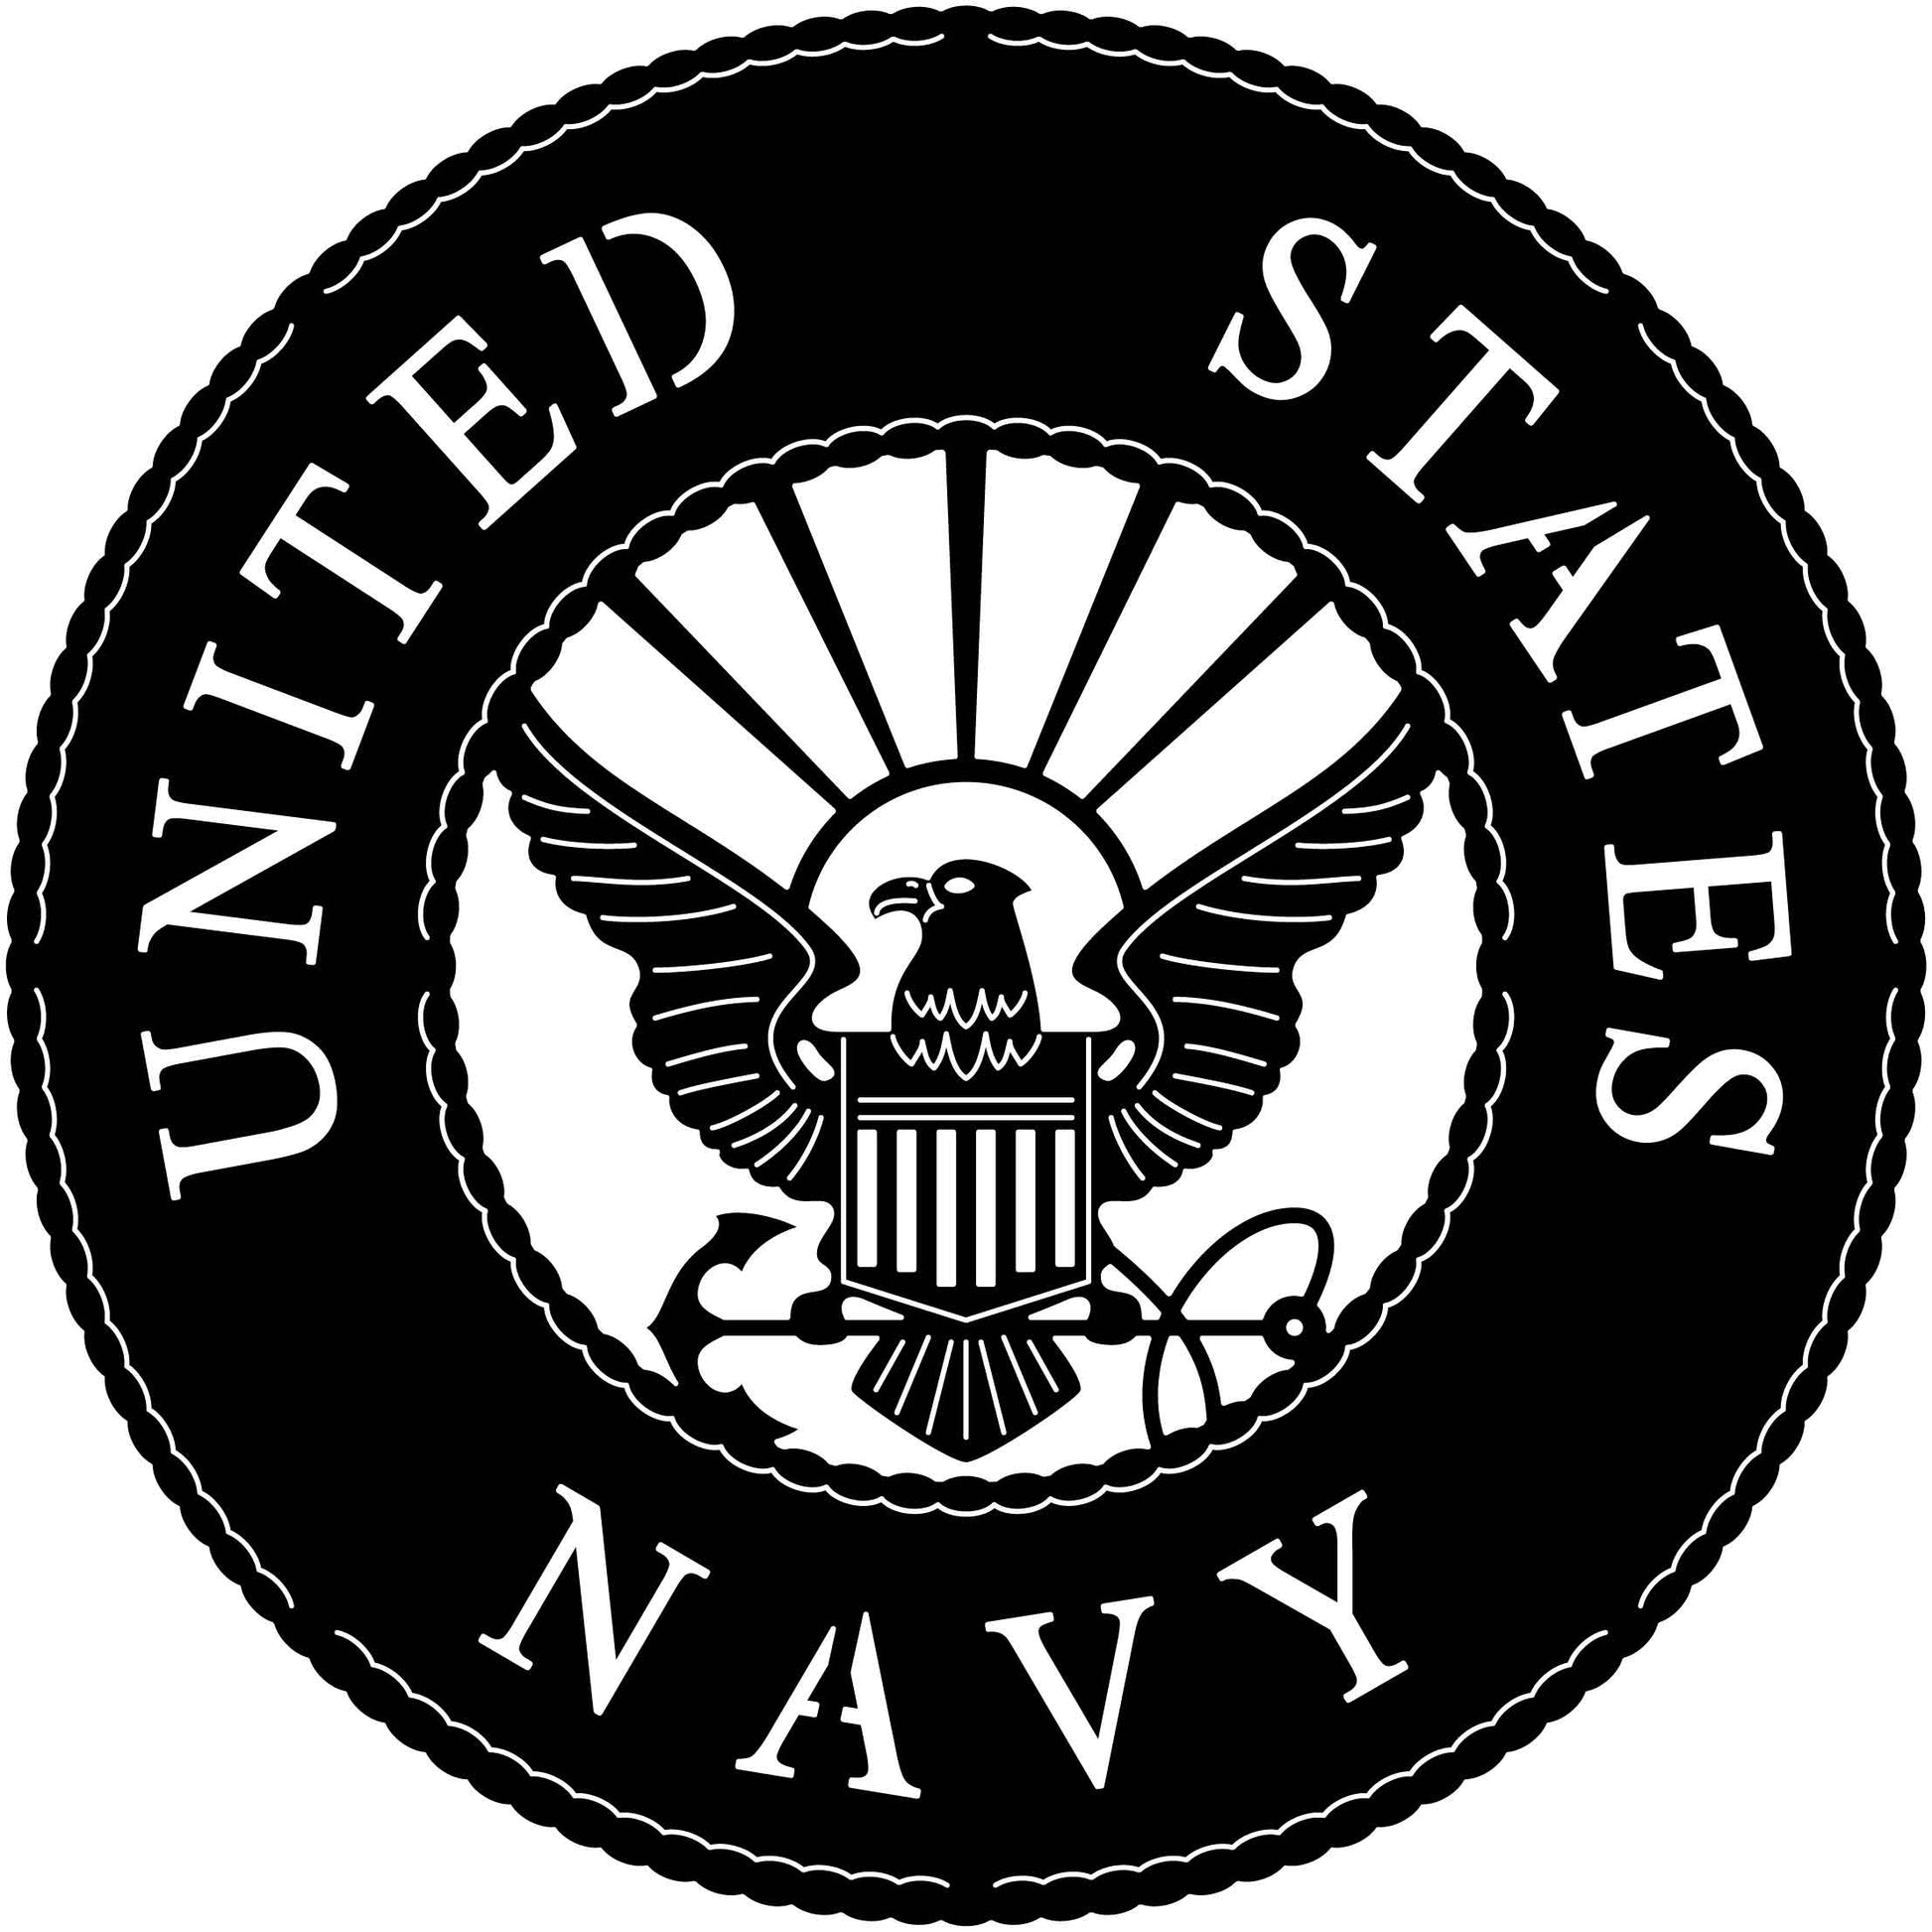 US Navy Eagle Badge-DXFforCNC.com-DXF Files cut ready cnc machines